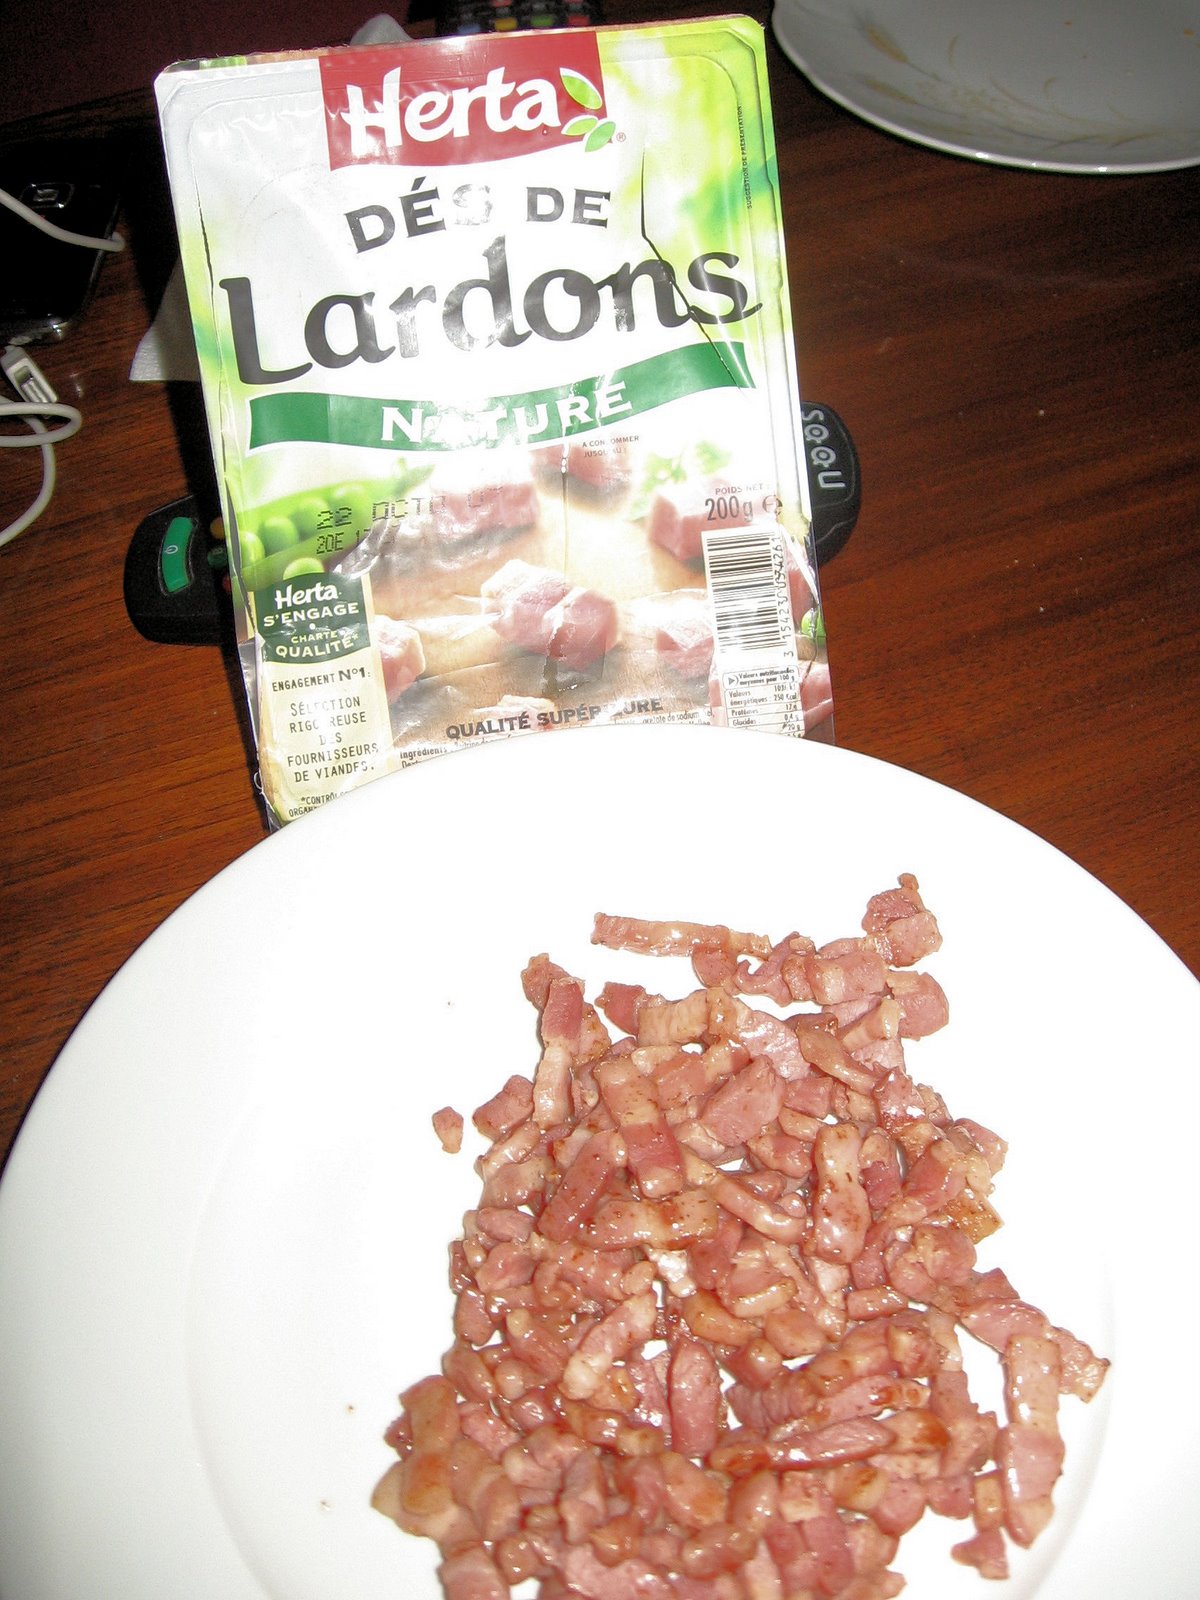 Lardons: The Frenchman’s "Bacon Bits"